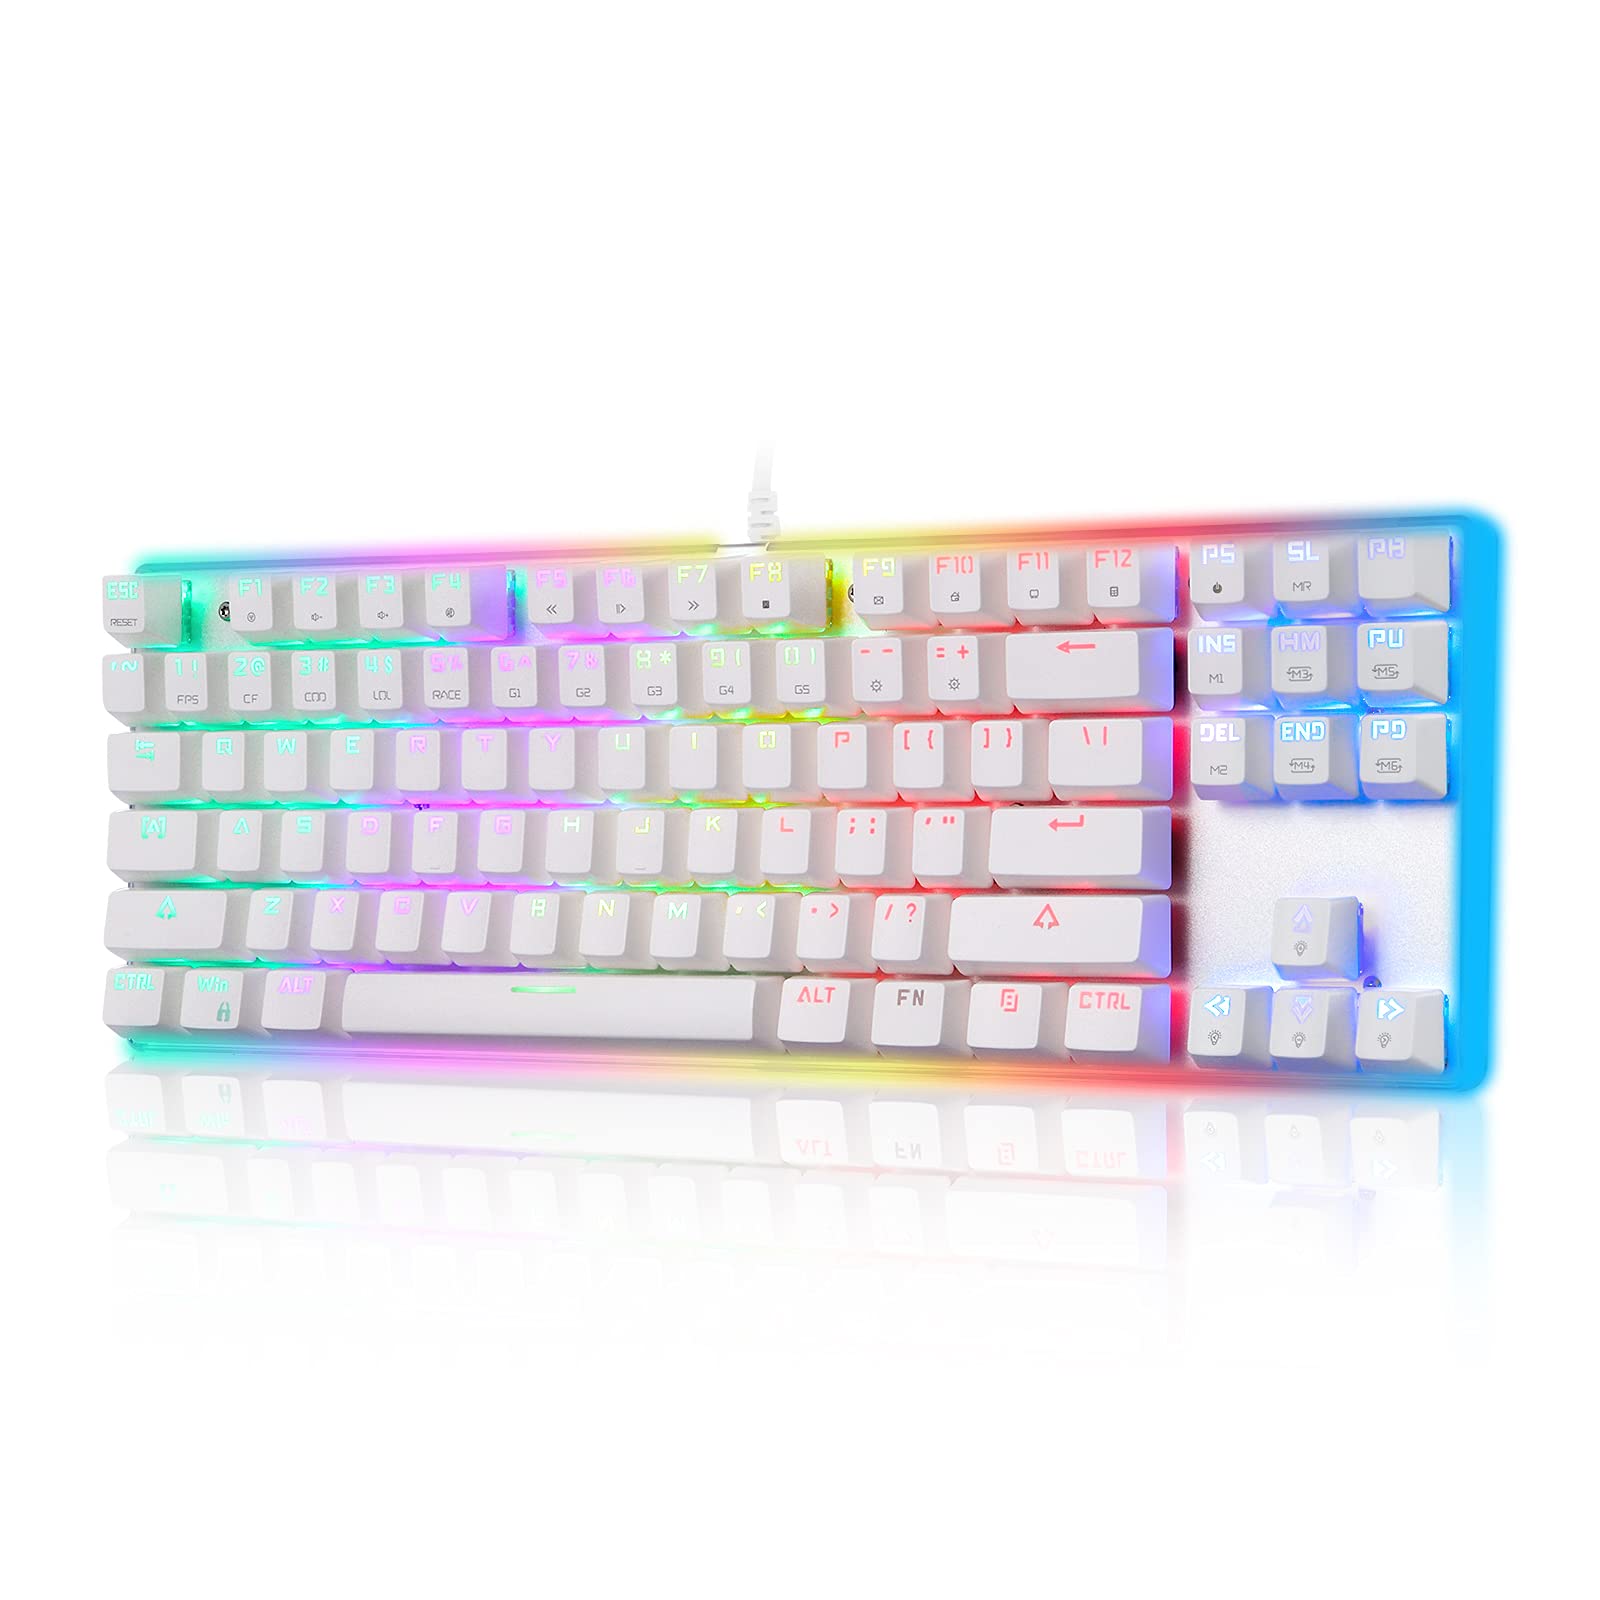 RGB backlit gaming keyboard with illuminated keys